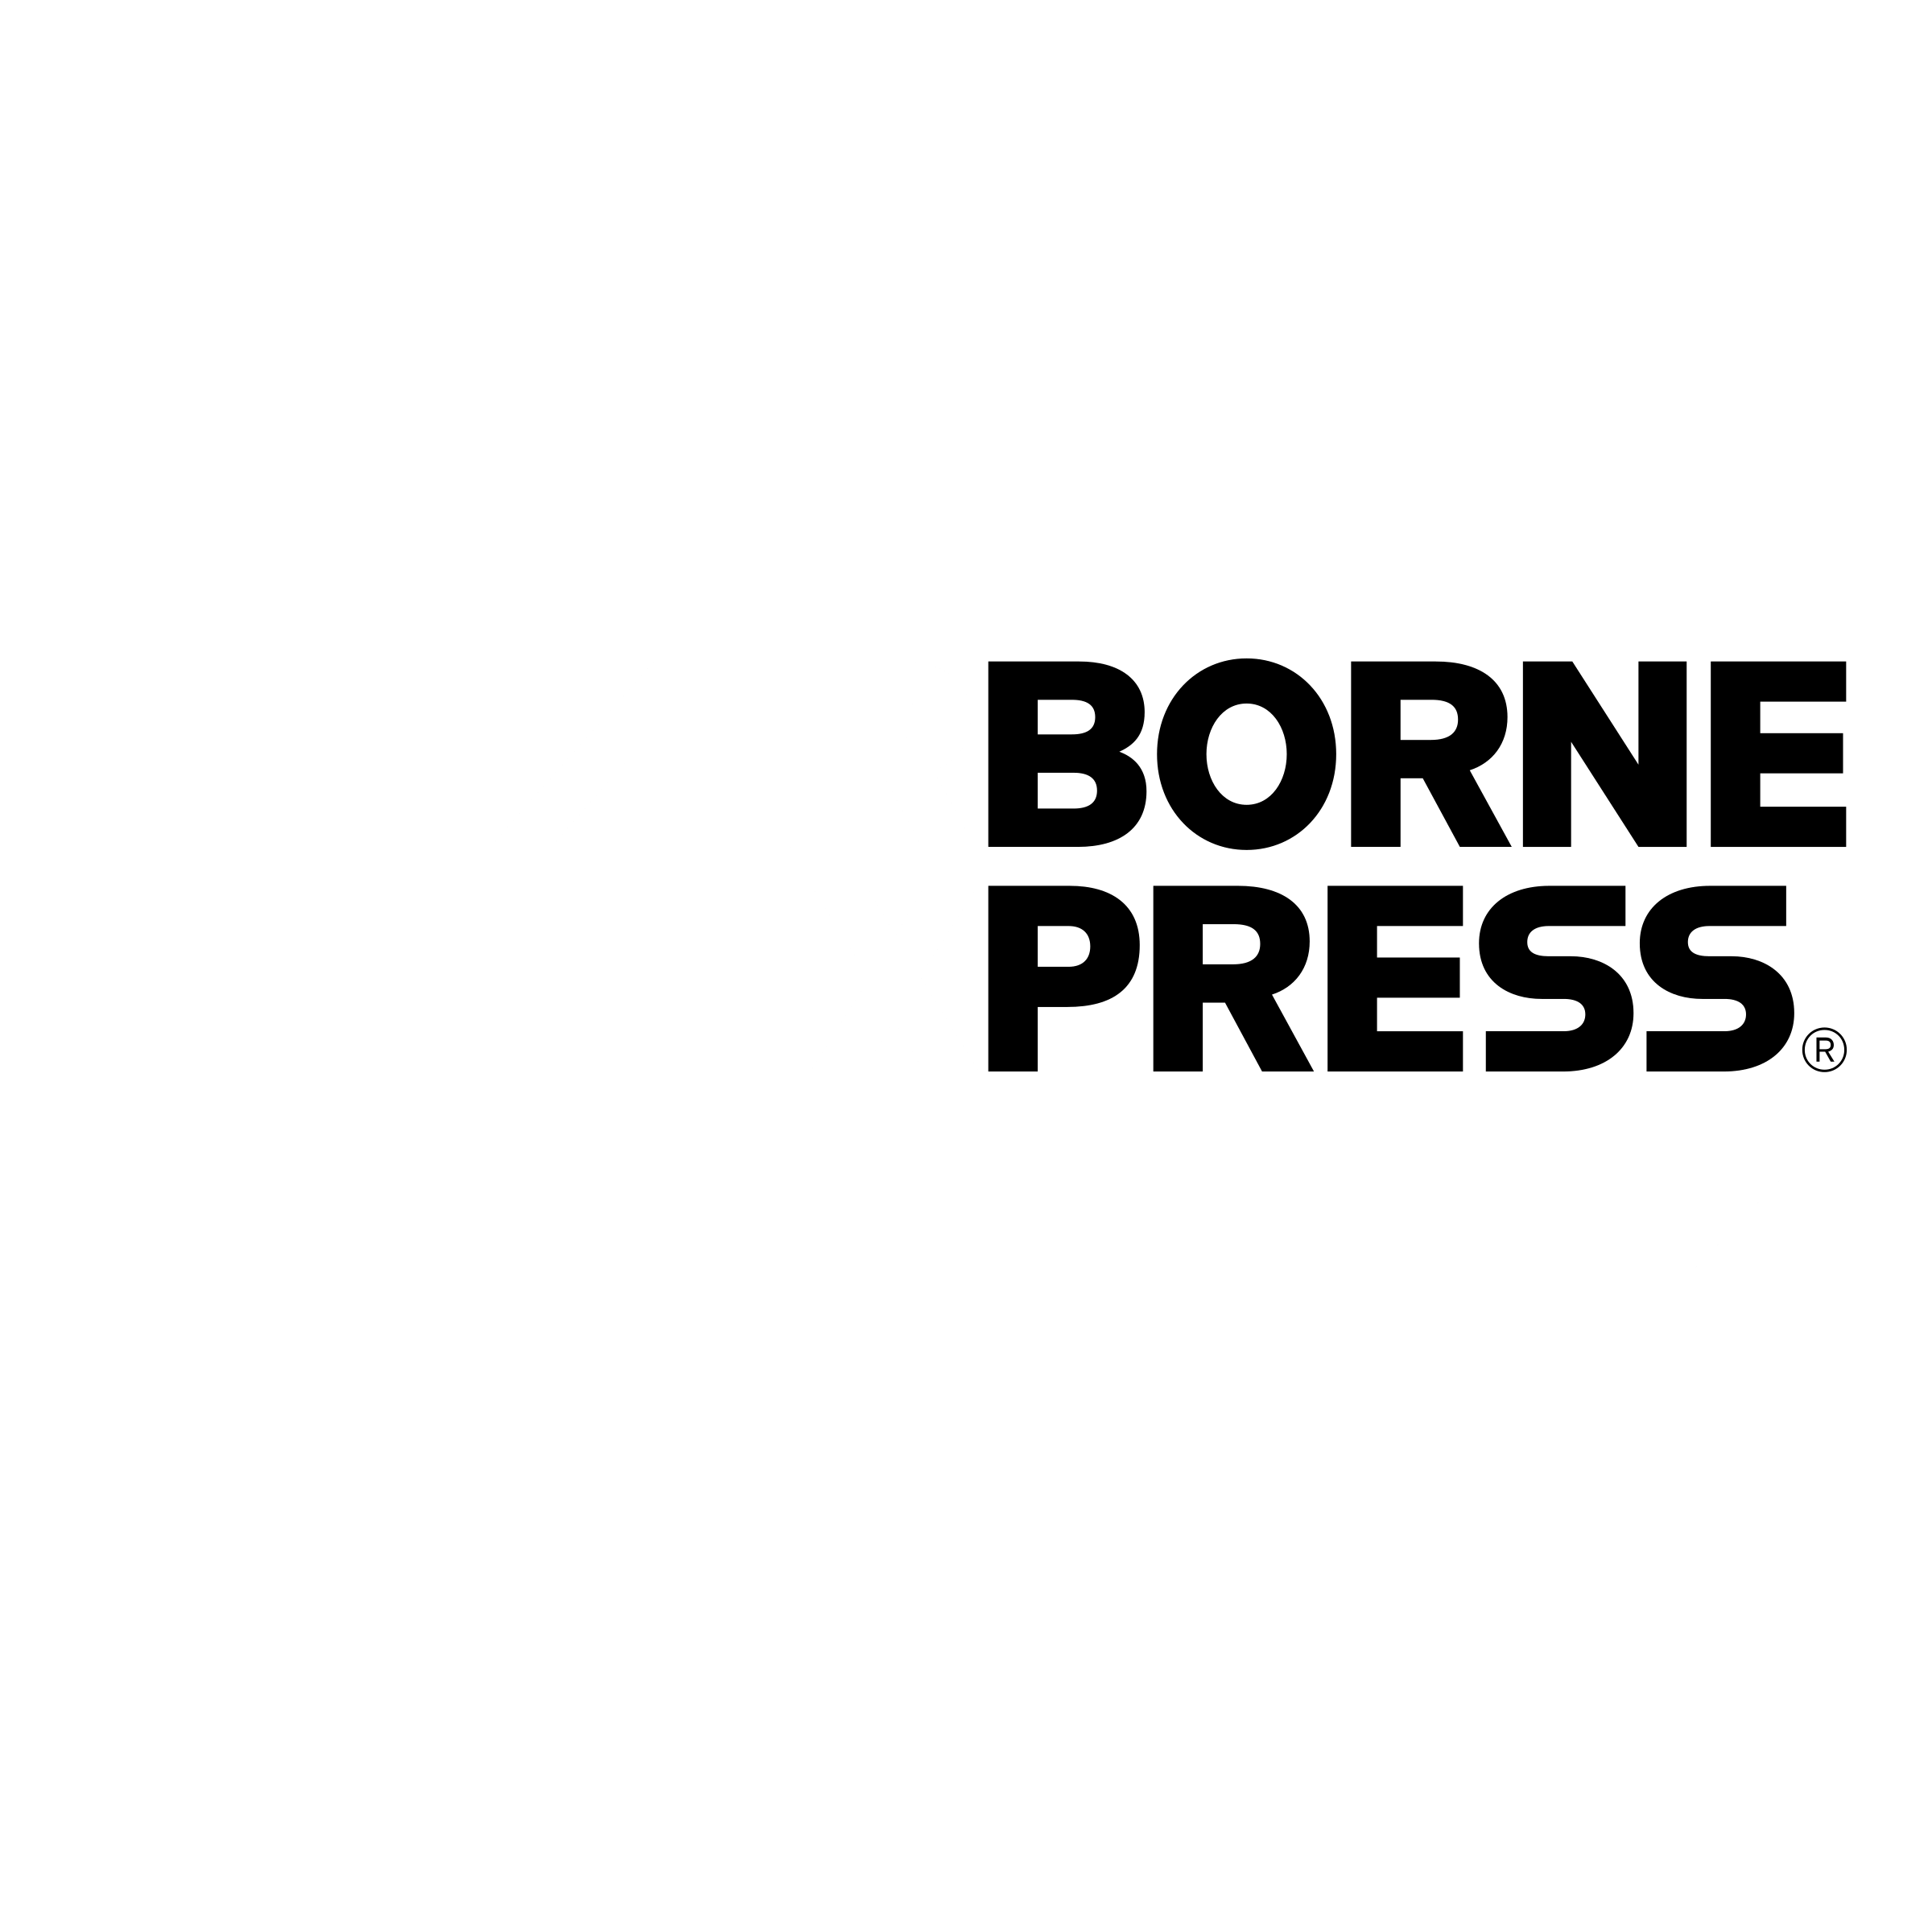 Airborne Express Logo - Airborne Express Logo PNG Transparent & SVG Vector - Freebie Supply